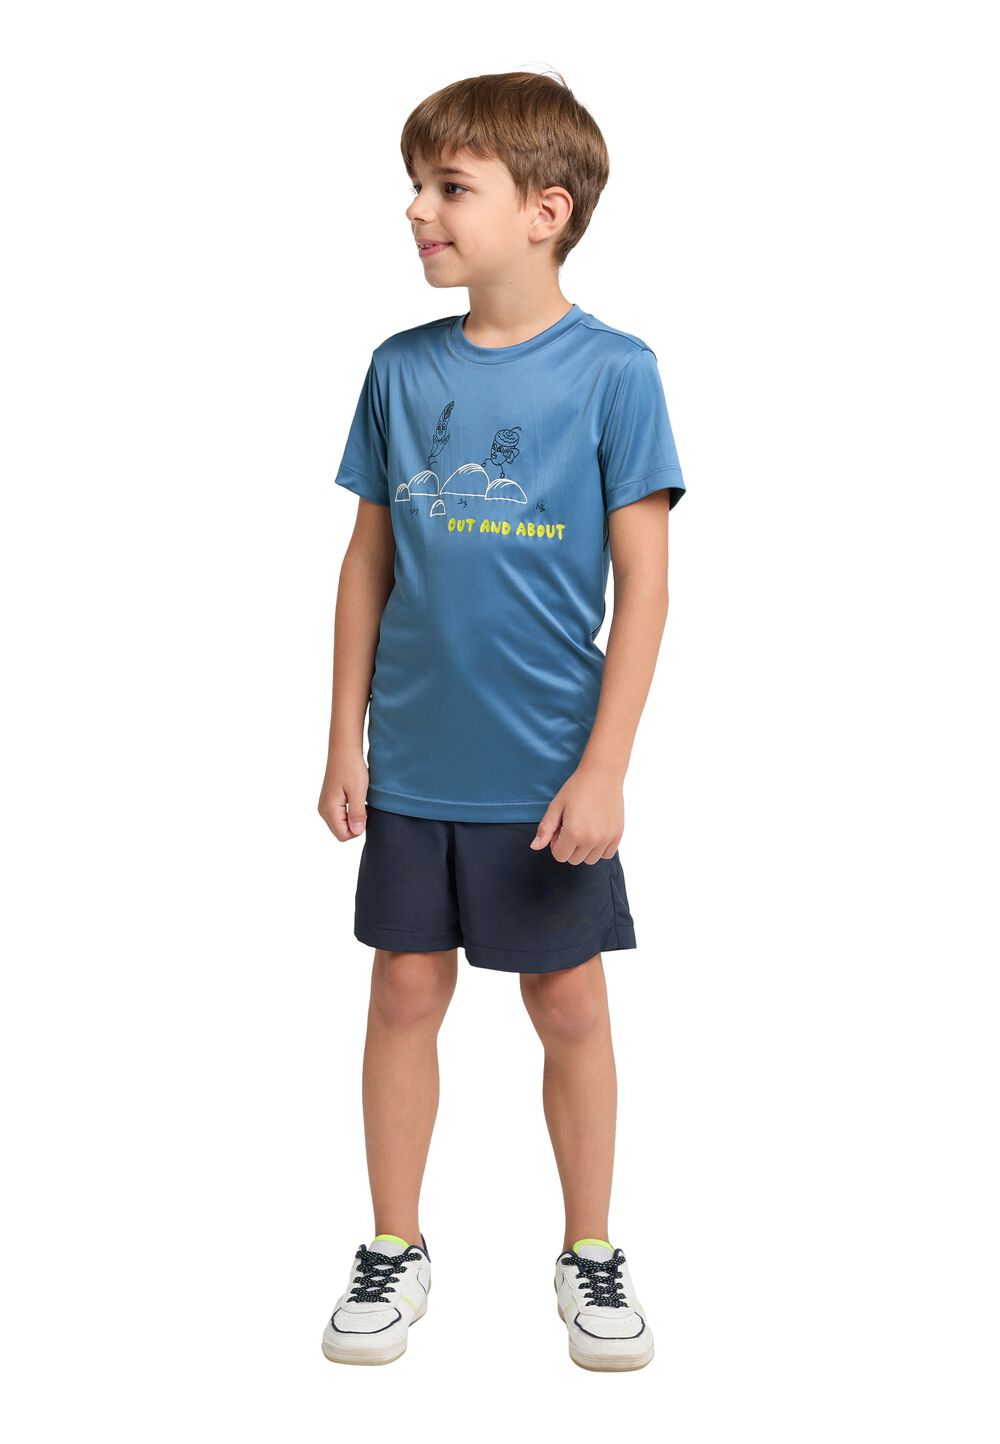 Jack Wolfskin OUT AND About T-Shirt Kids Functioneel shirt Kinderen 152 elemental blue elemental blue